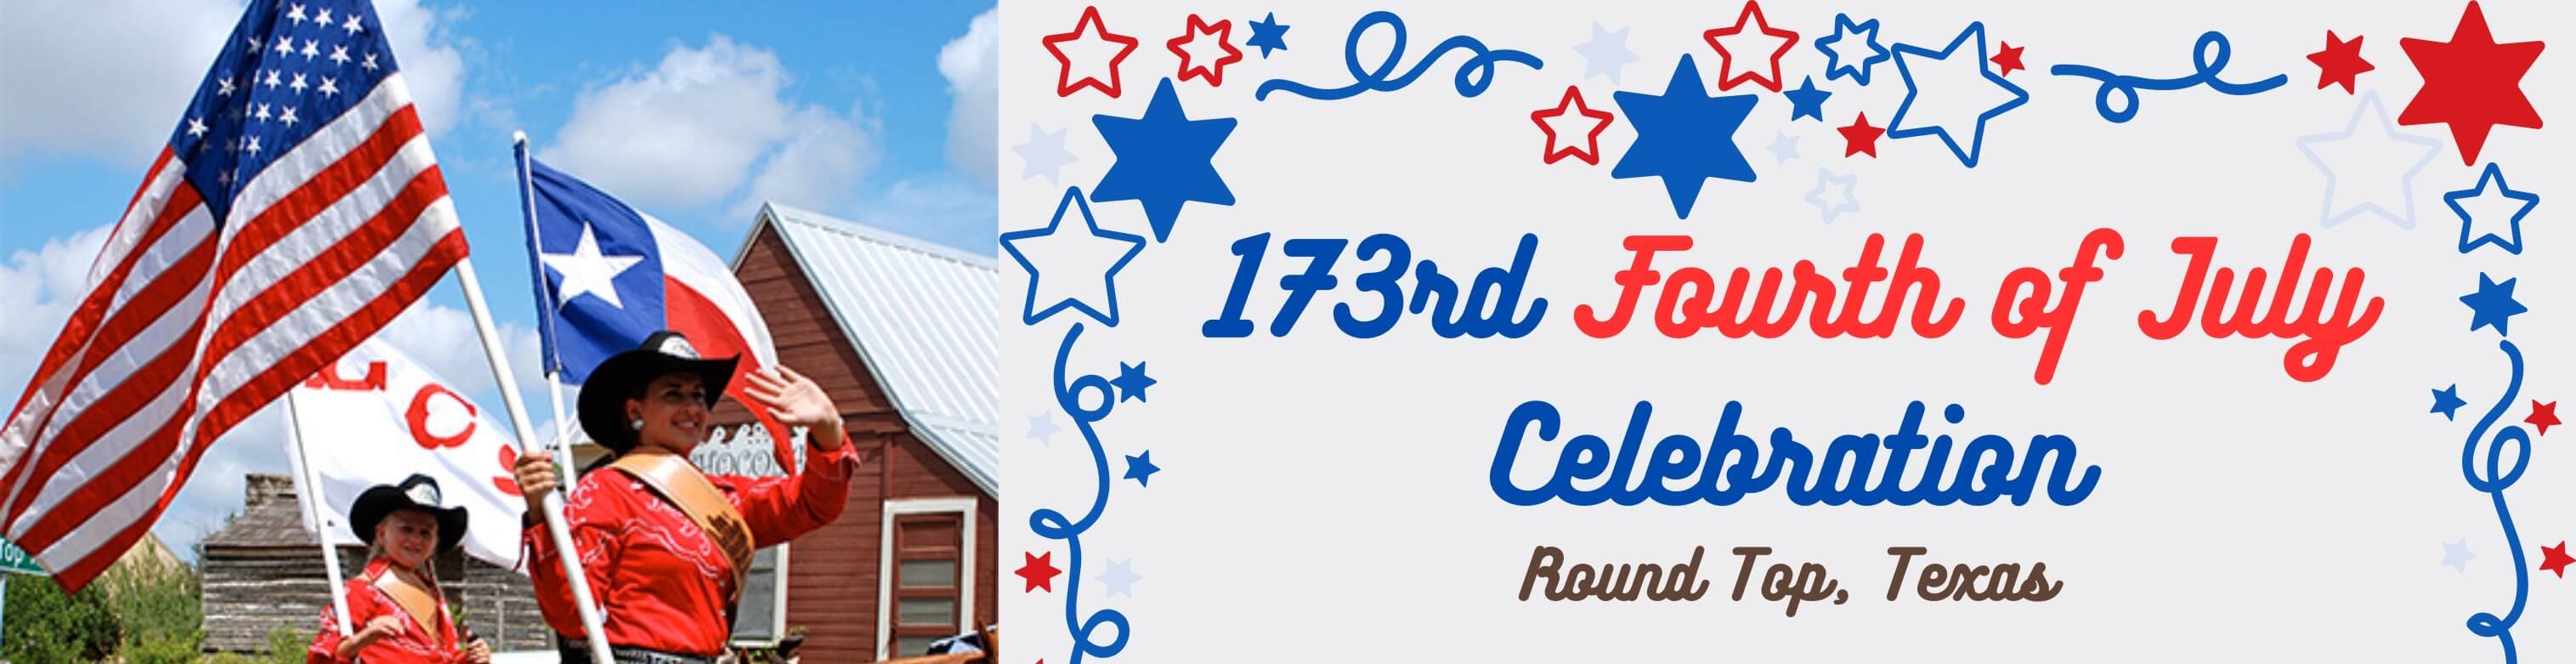 173rd Fourth of July Celebration - 1